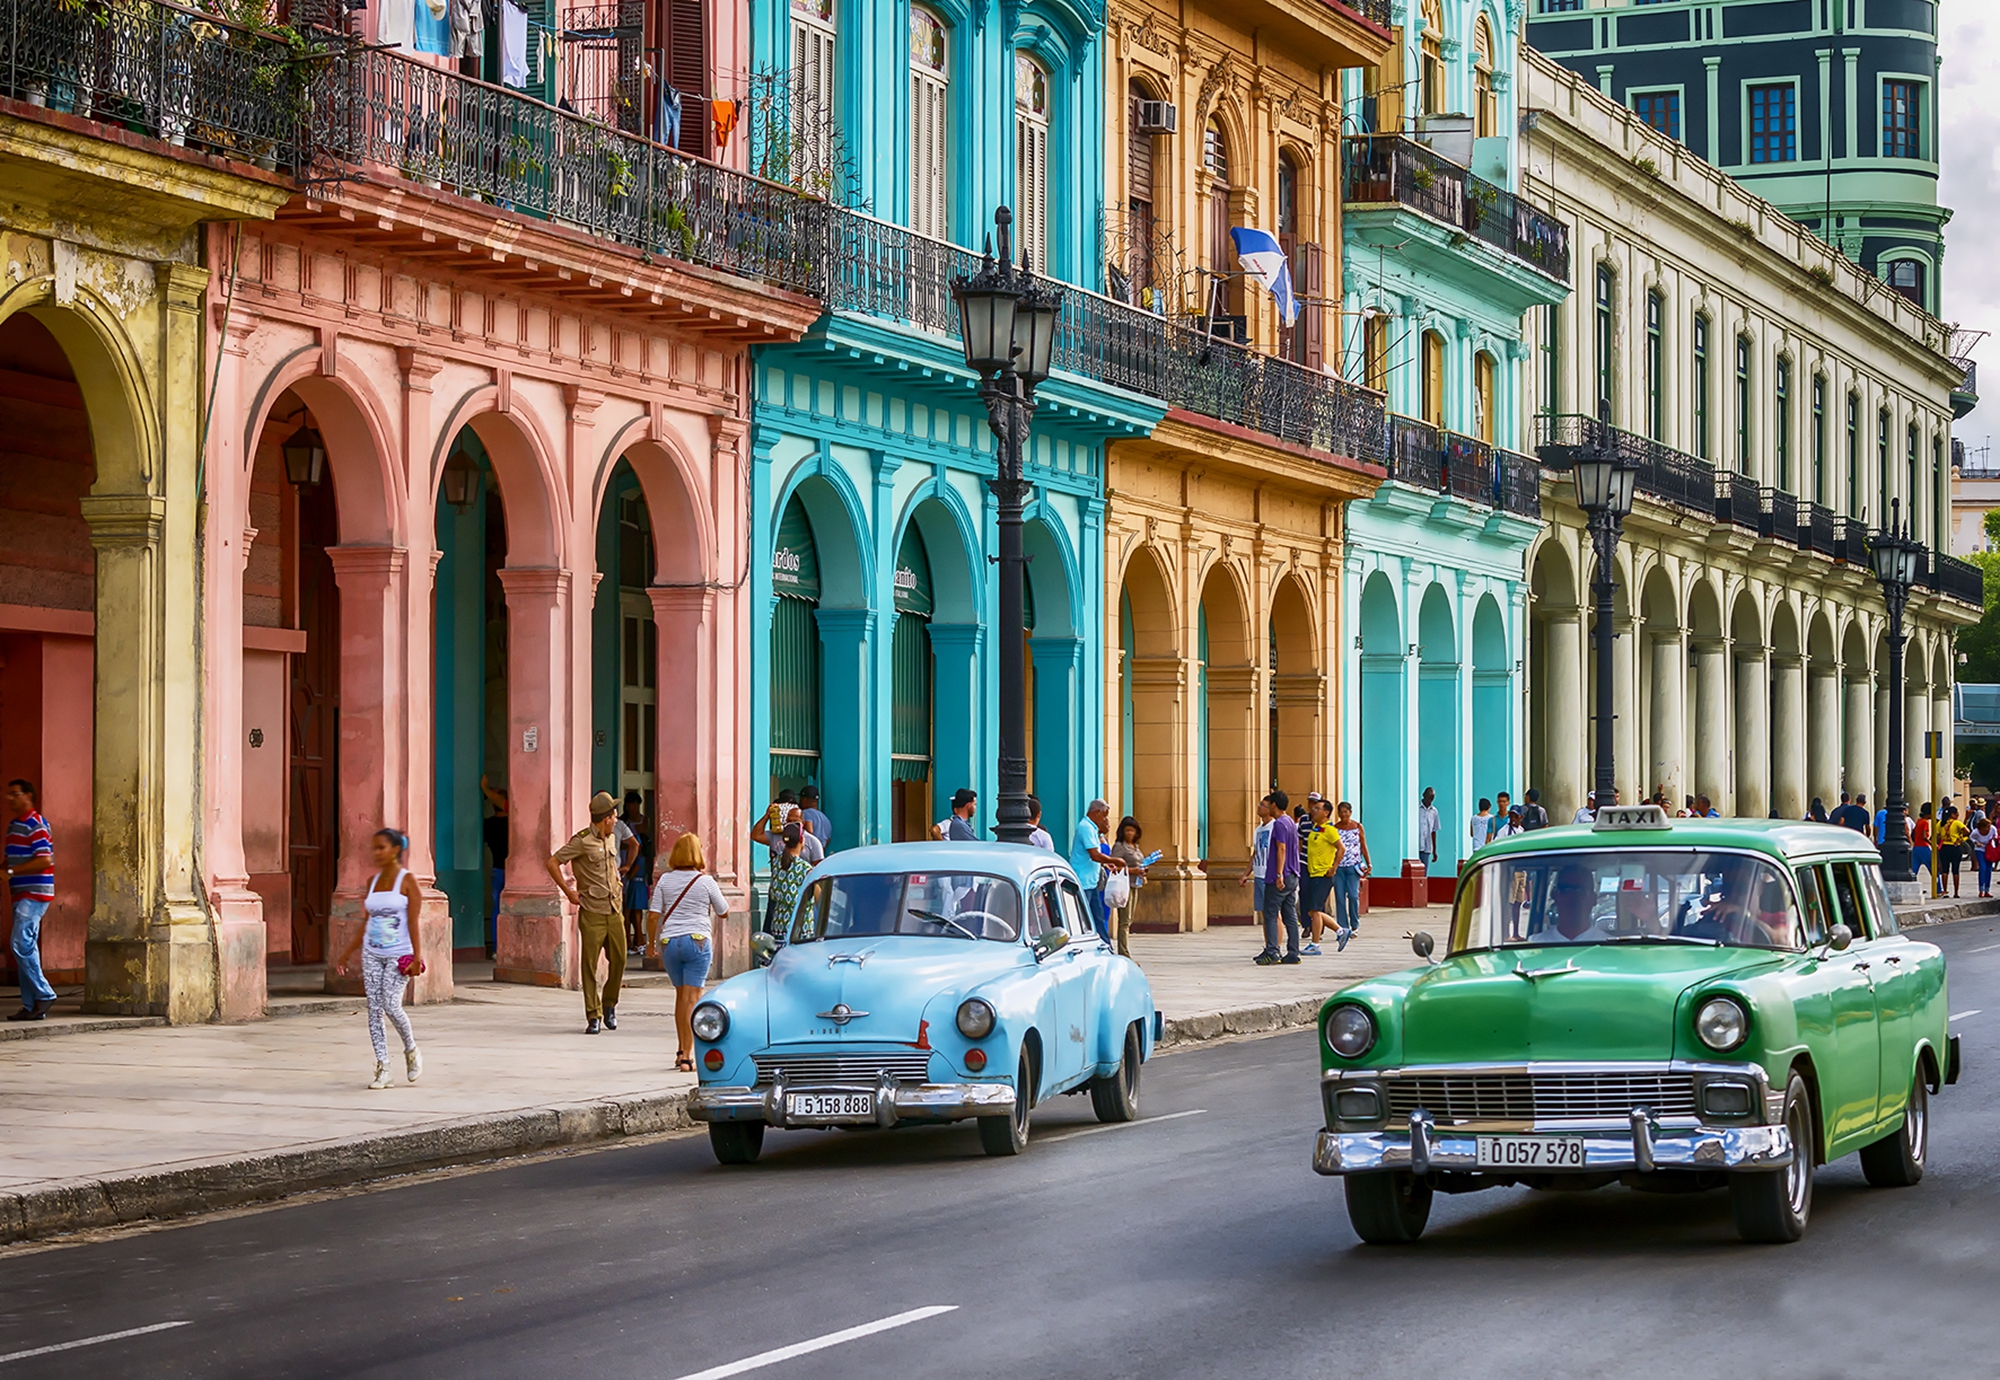 Fototapete „Cuba“ von Sunnydecor